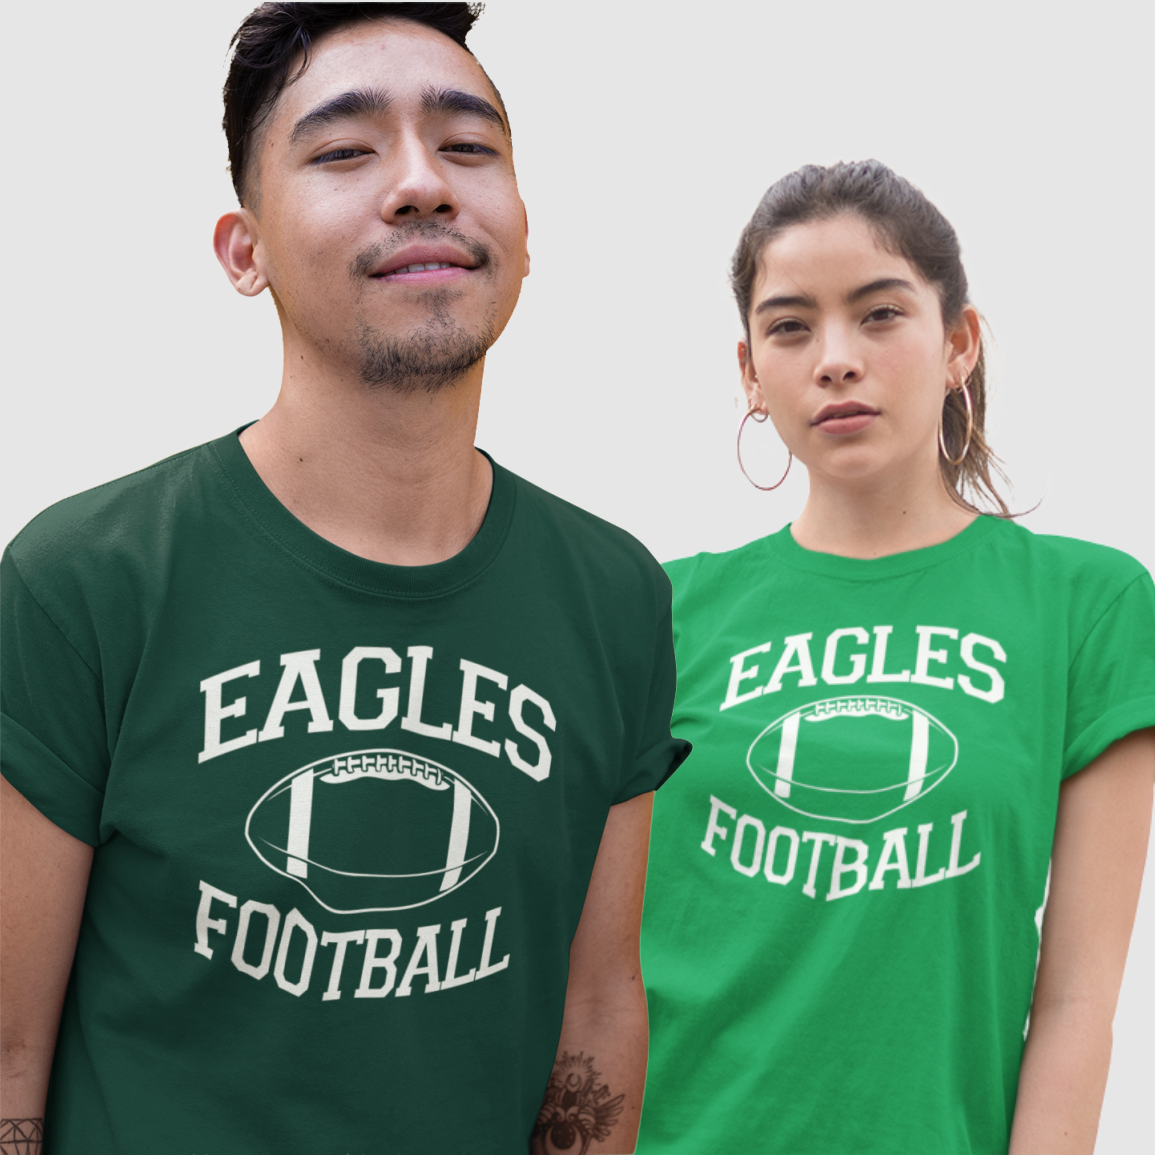 Eagles Football White Print T-Shirt